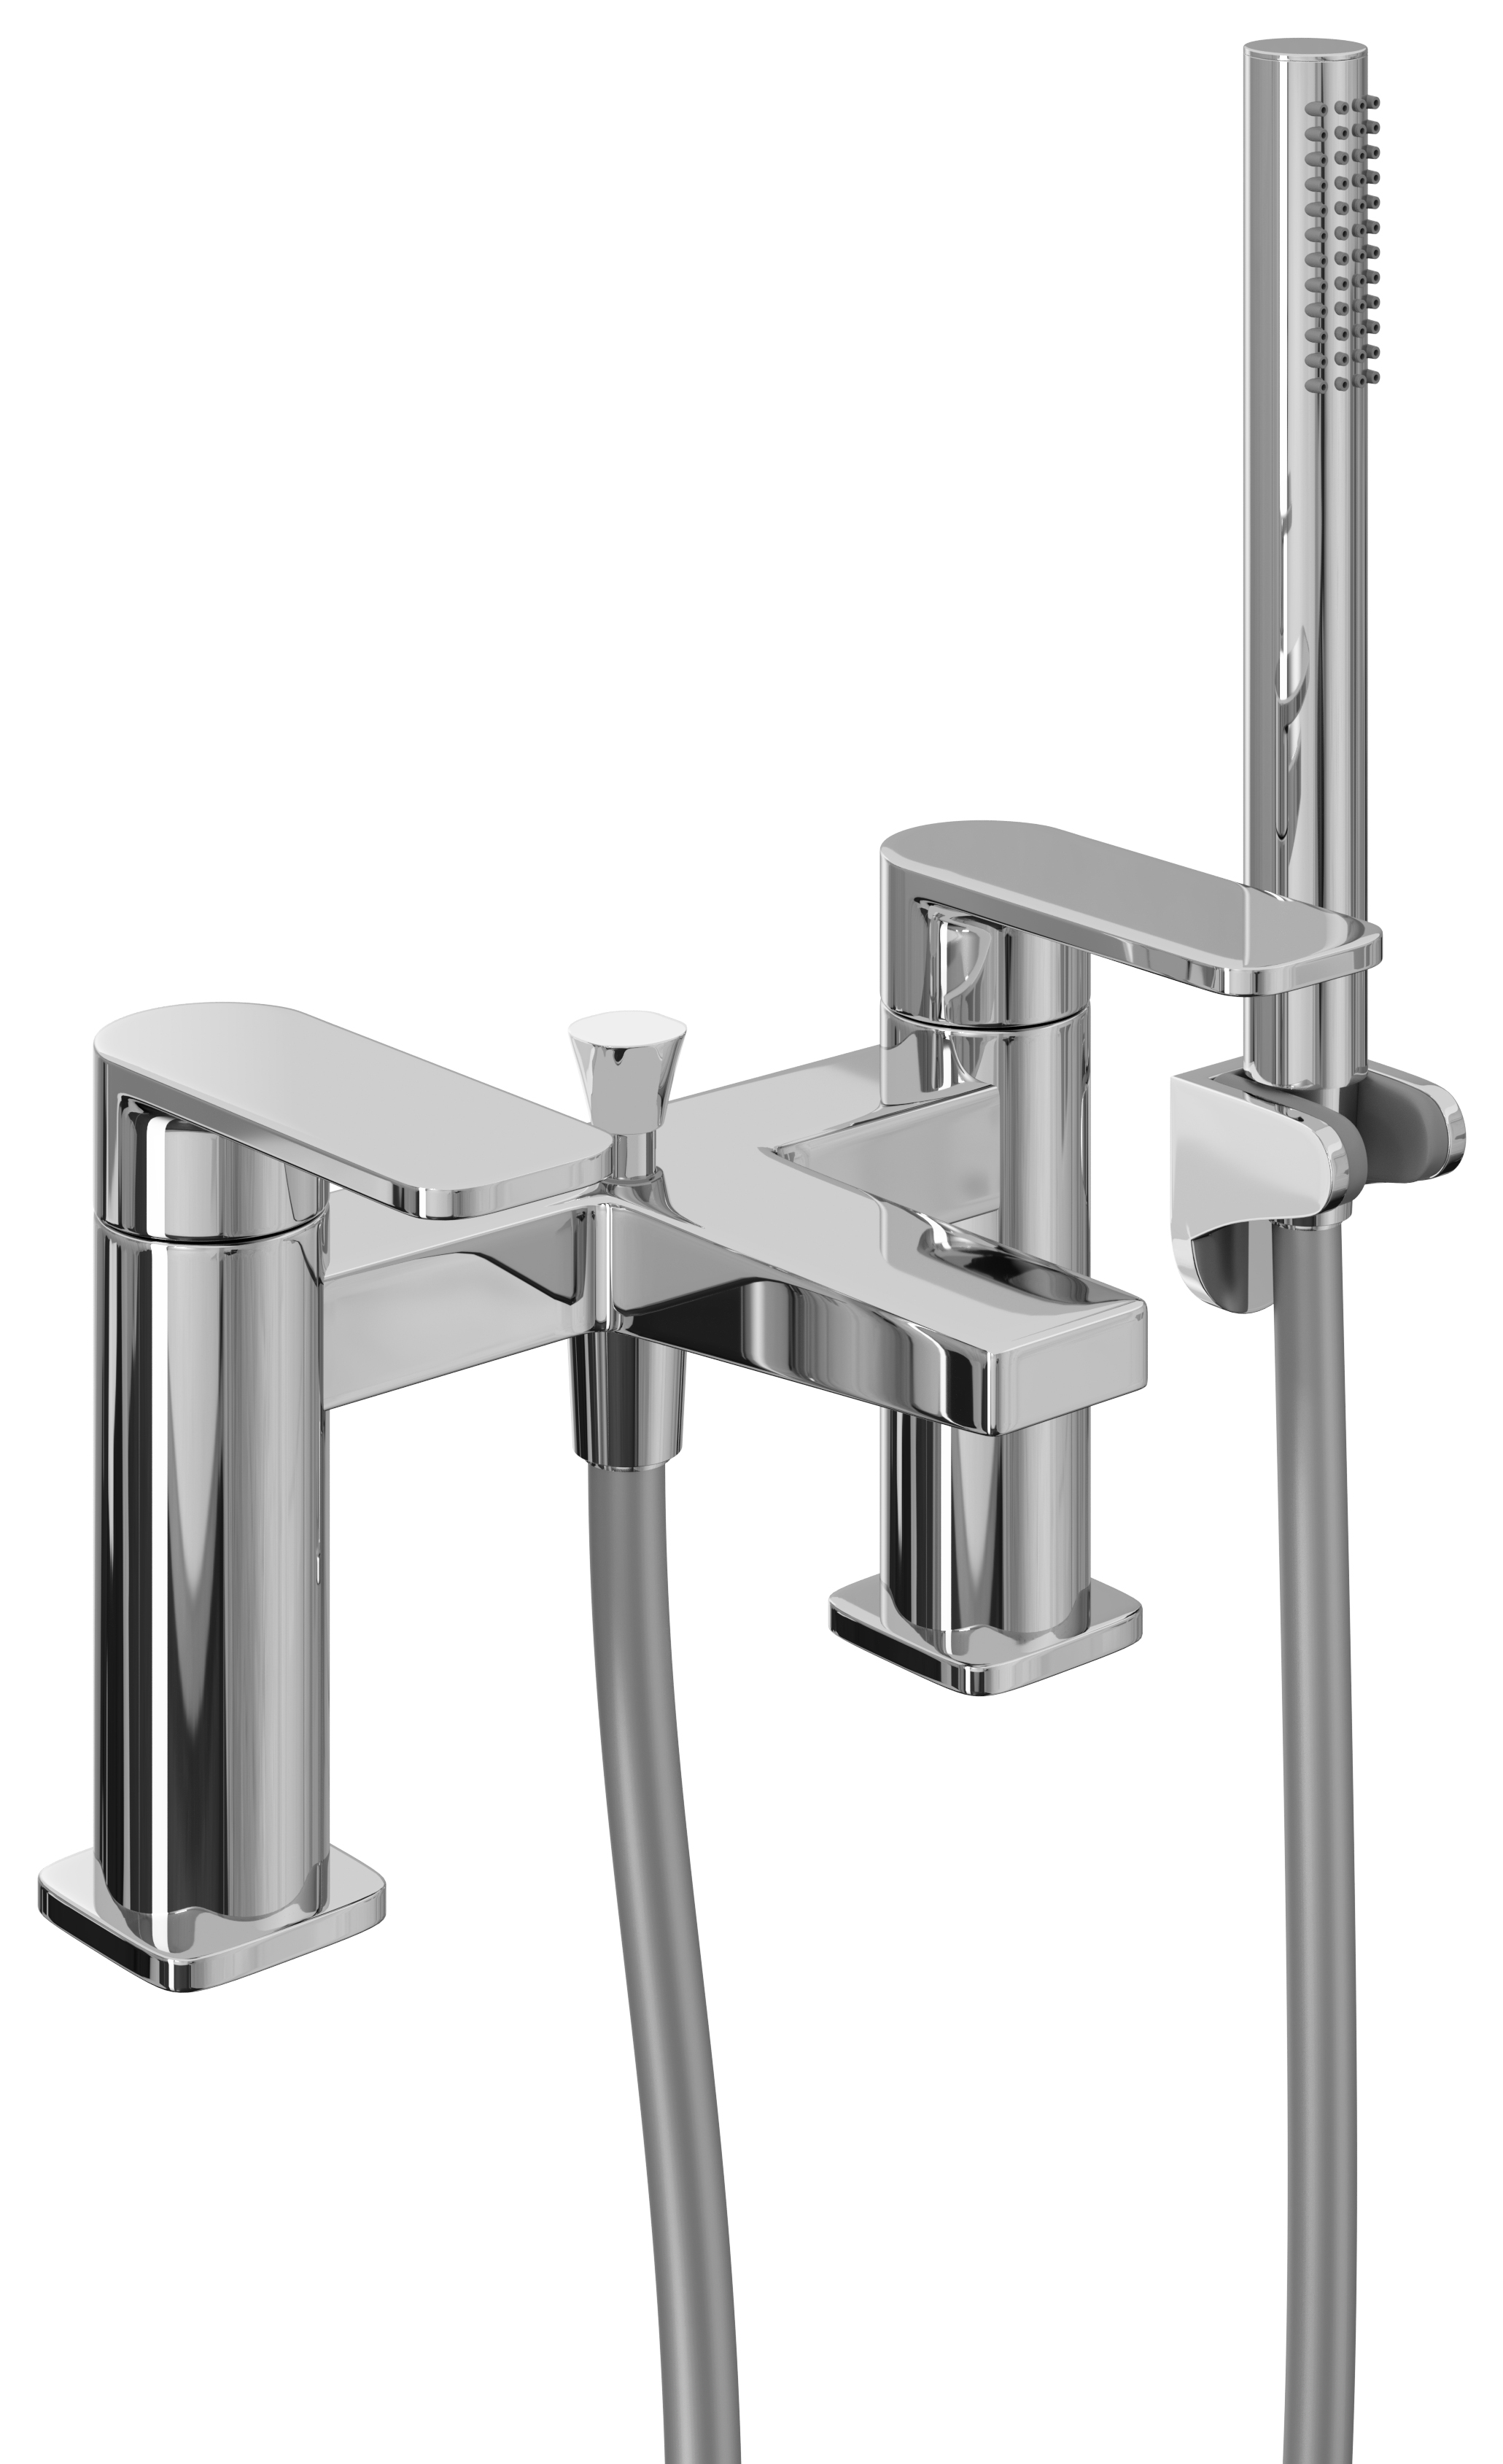 Image of Hemington Double Lever Deck Mounted Bath Shower Mixer Tap - Chrome